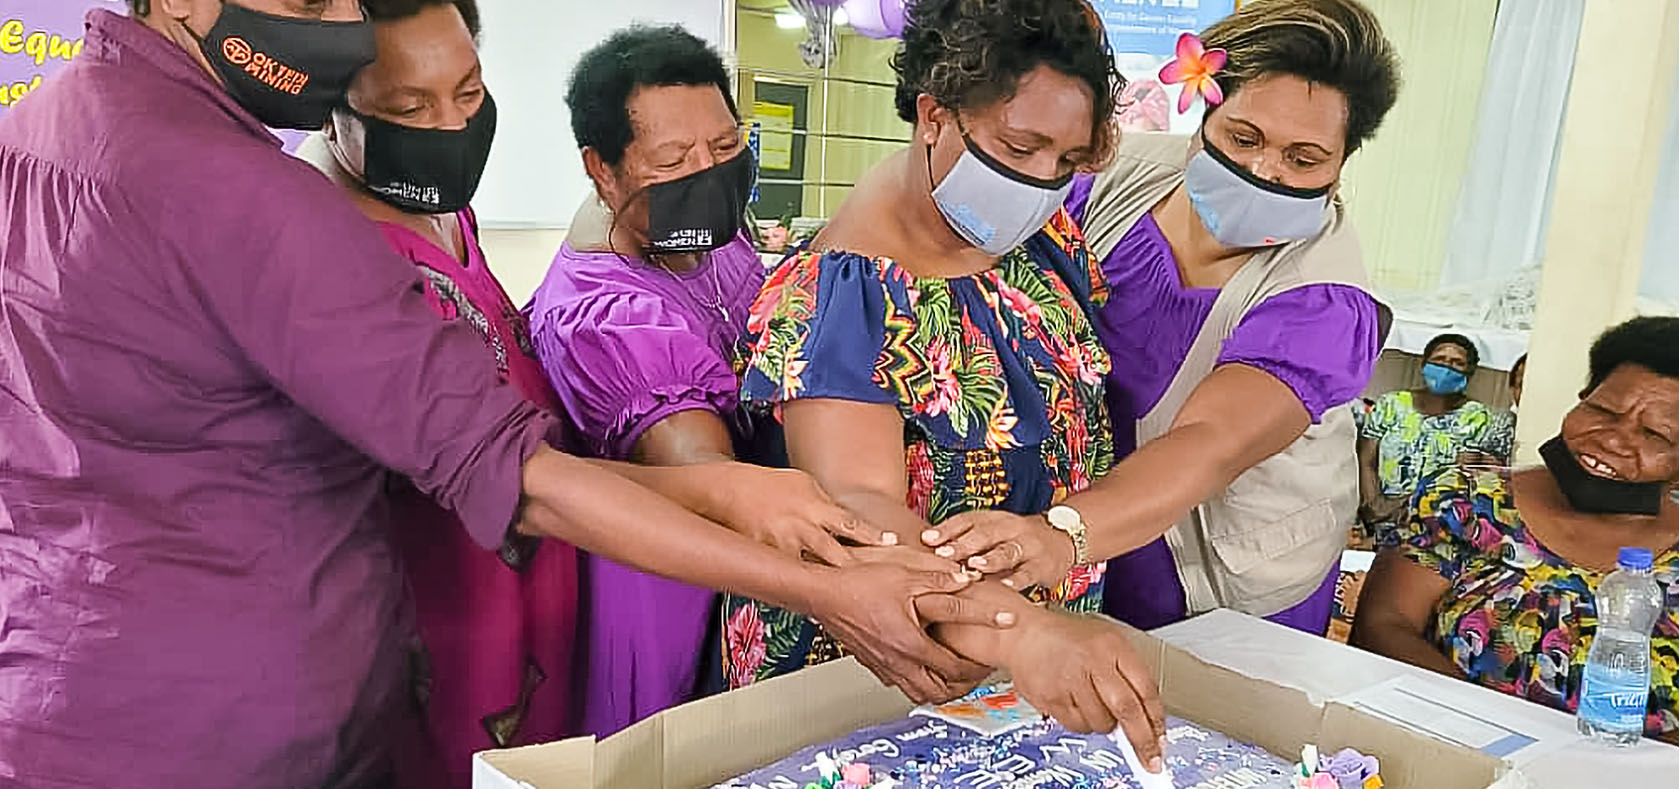 Goroka market vendors cut a cake as part of the commemoration to mark the International Women’s Day 2022. Photo: UN Women/Aidah Nanyonjo